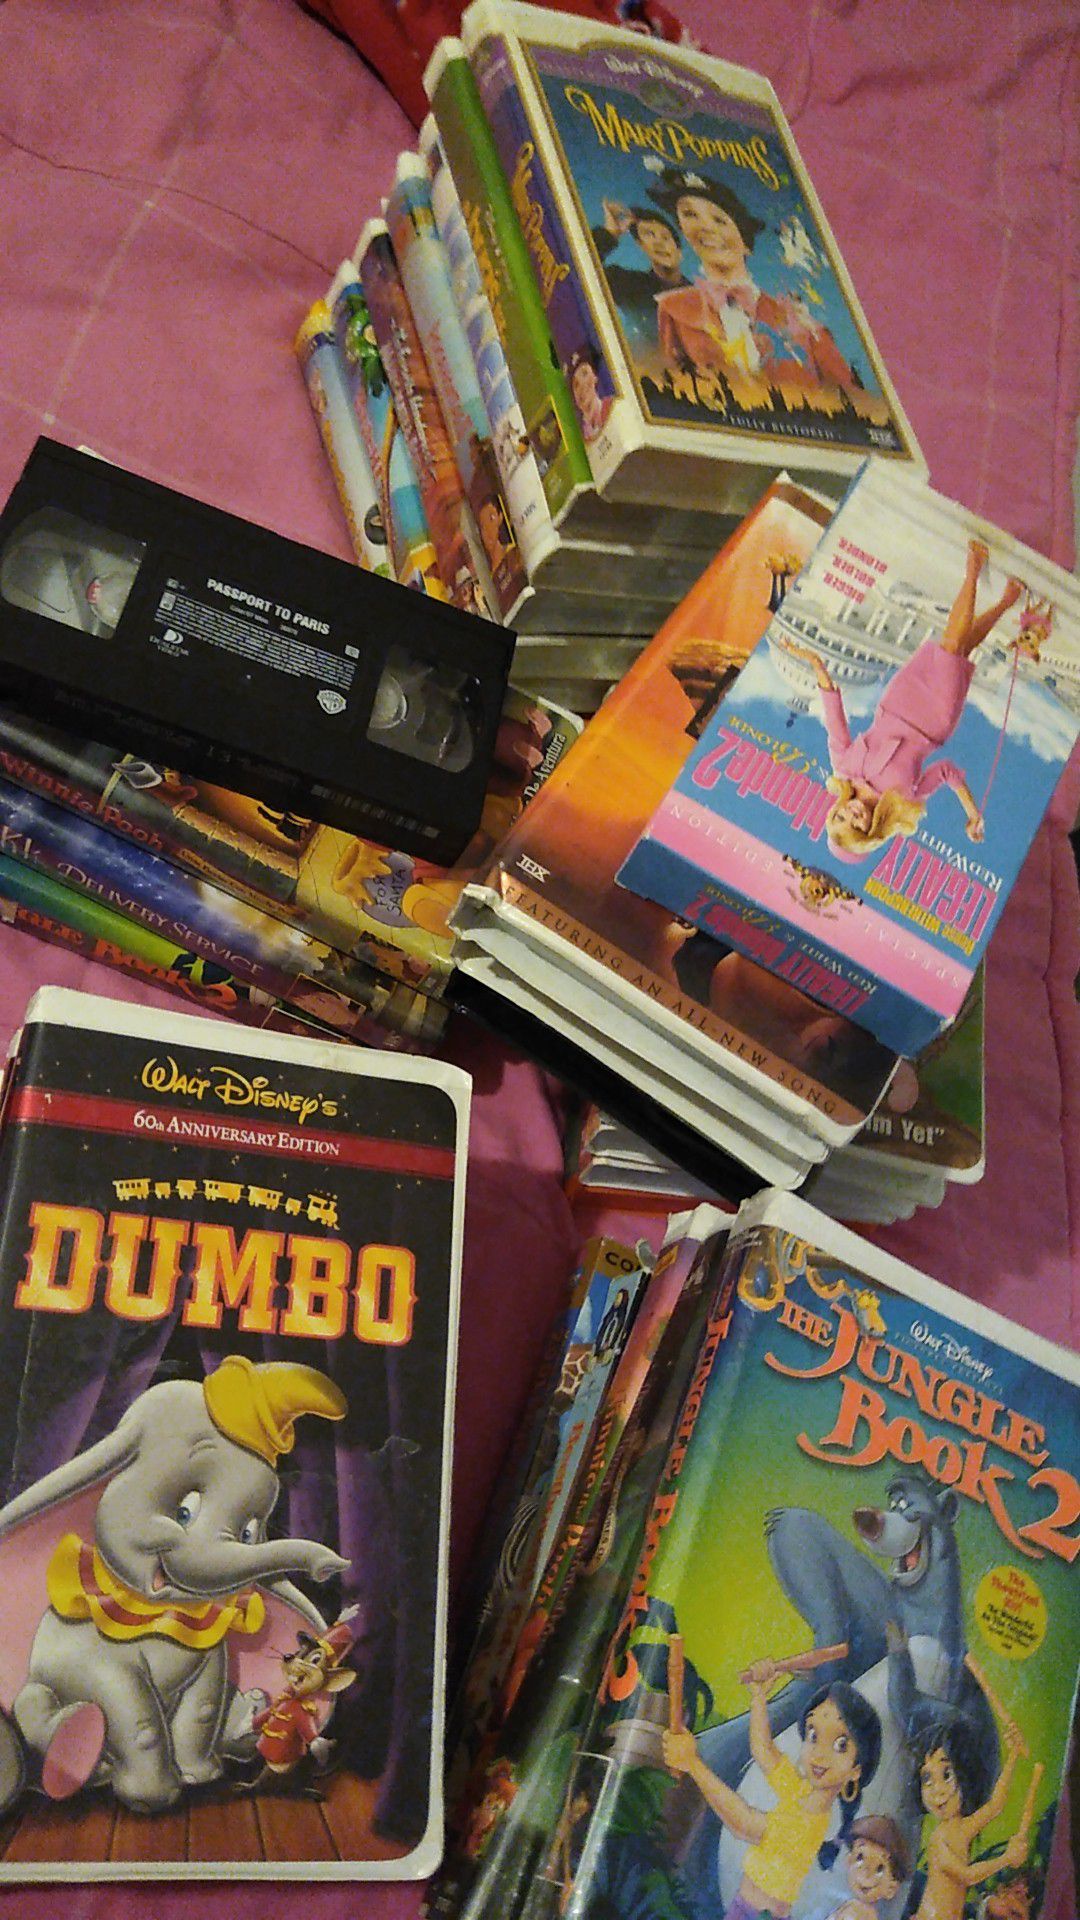 Games VHS movies ofrescan $$ son mas movies todas para VHS